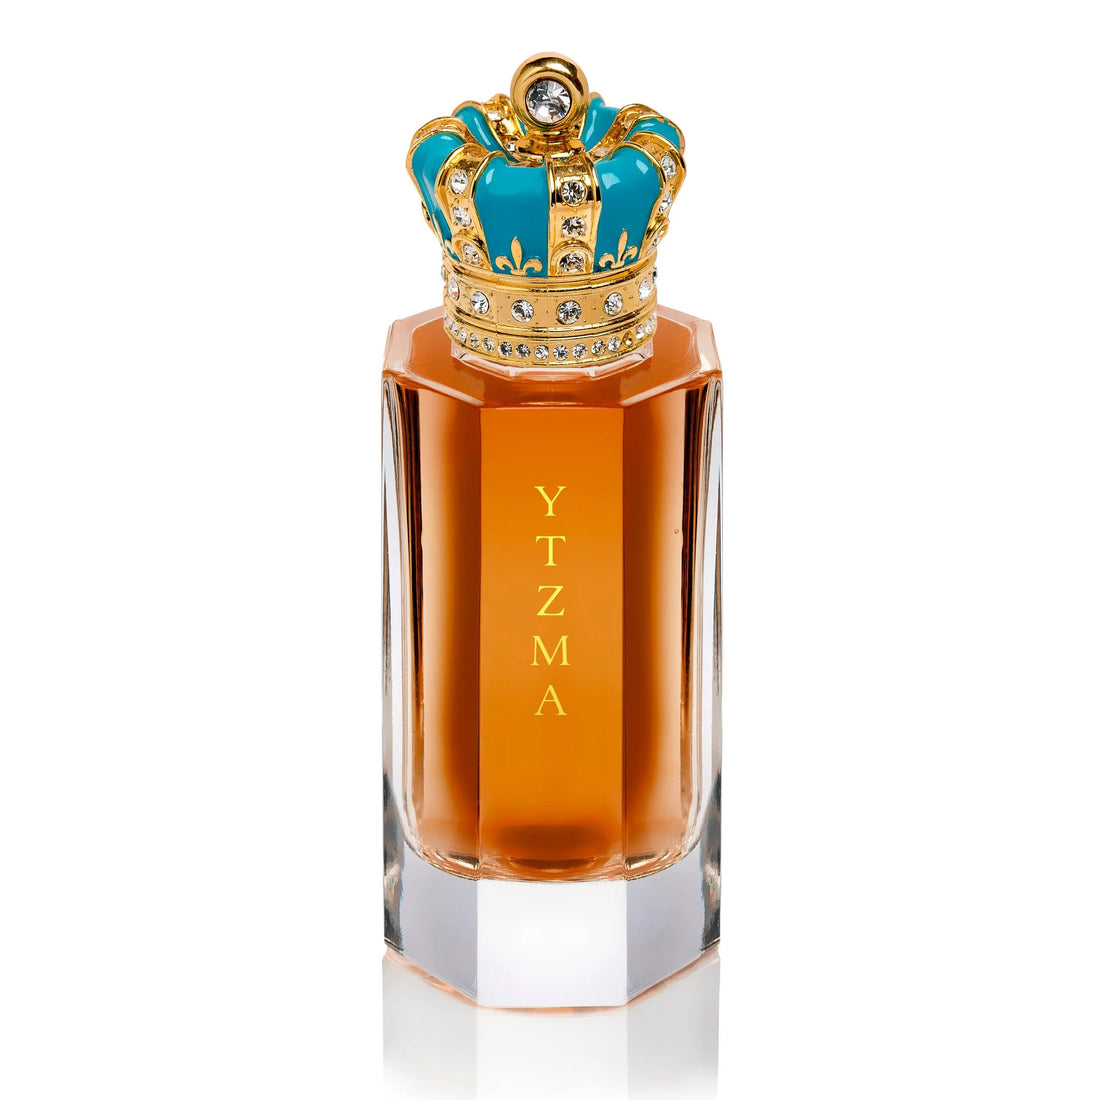 Ytzma Royal Crown – 50 ml